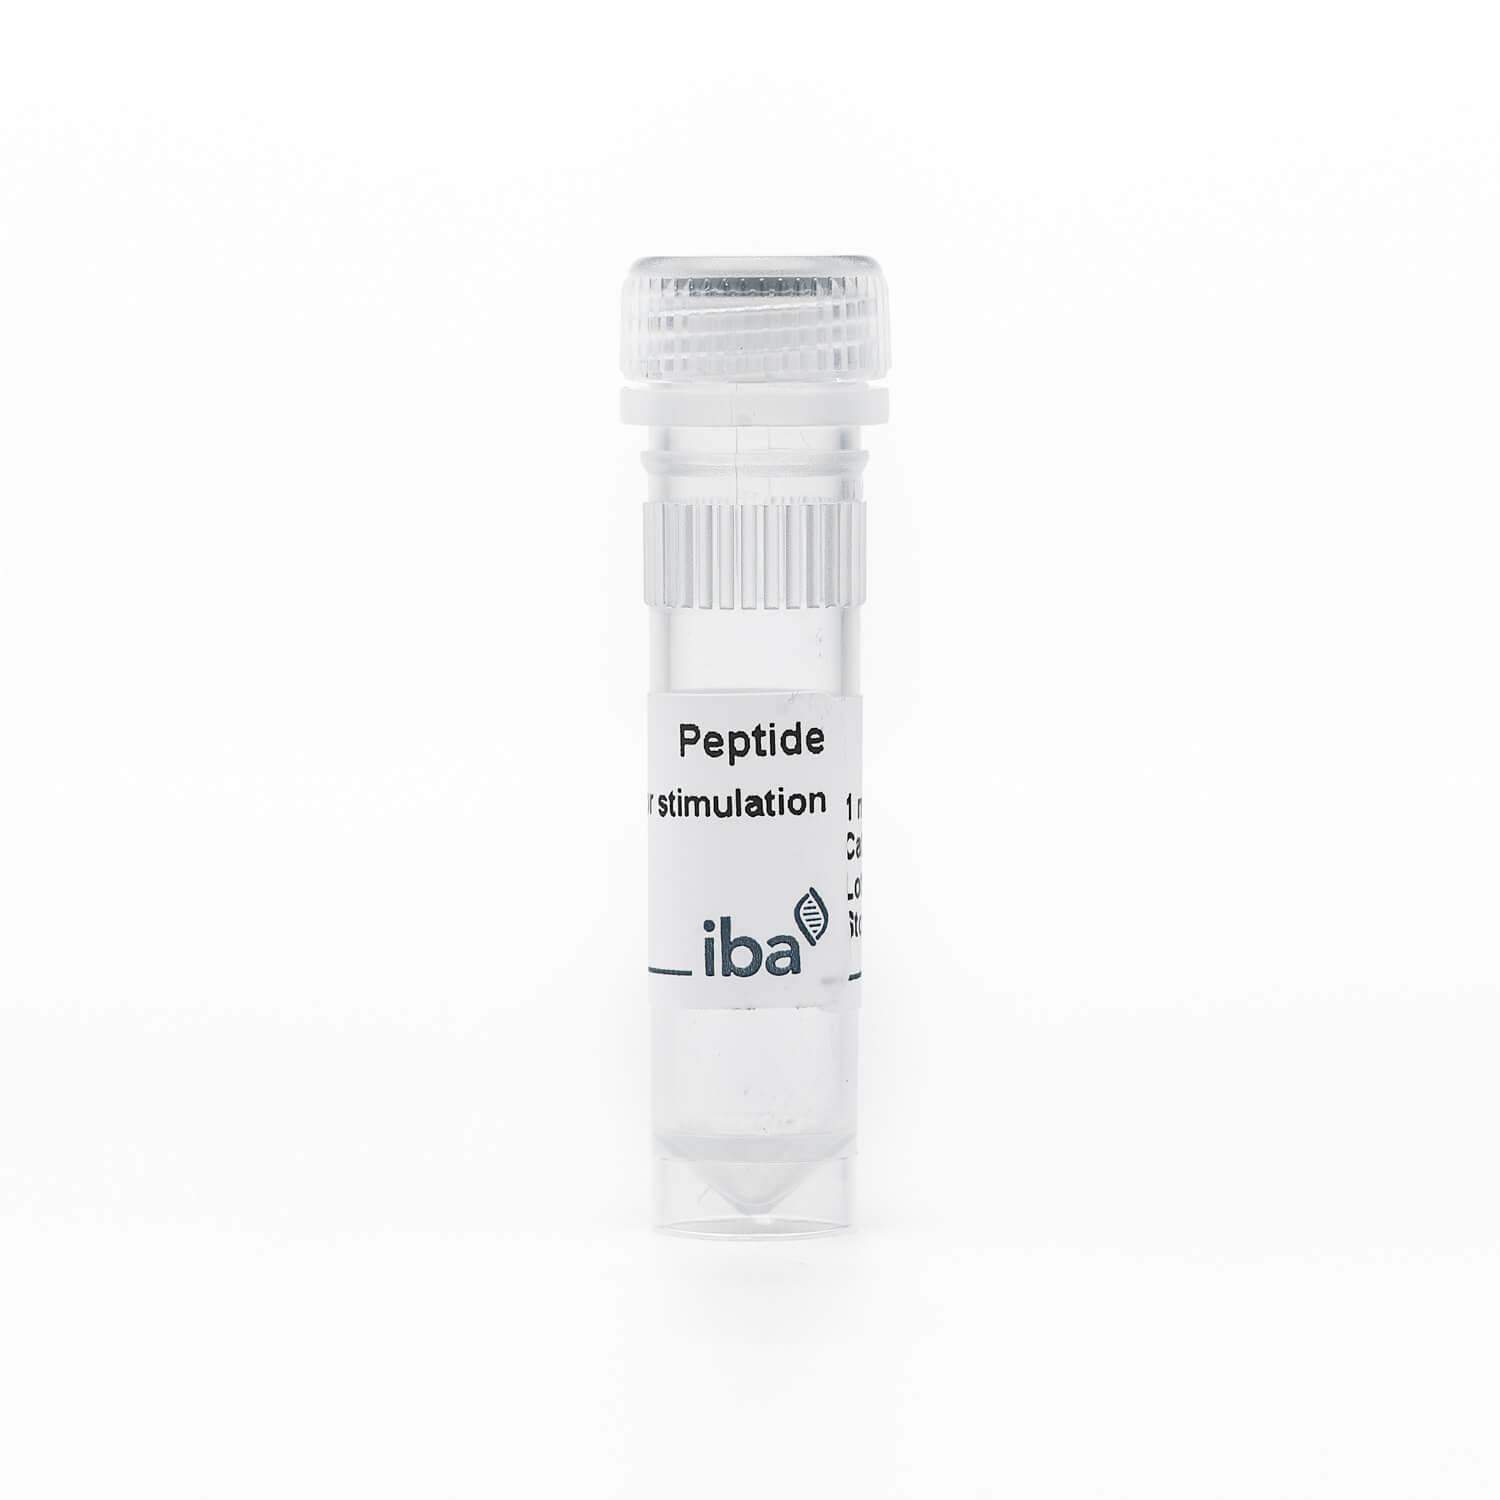 MART-1 peptide ELAGIGILTV (HLA-A*0201)